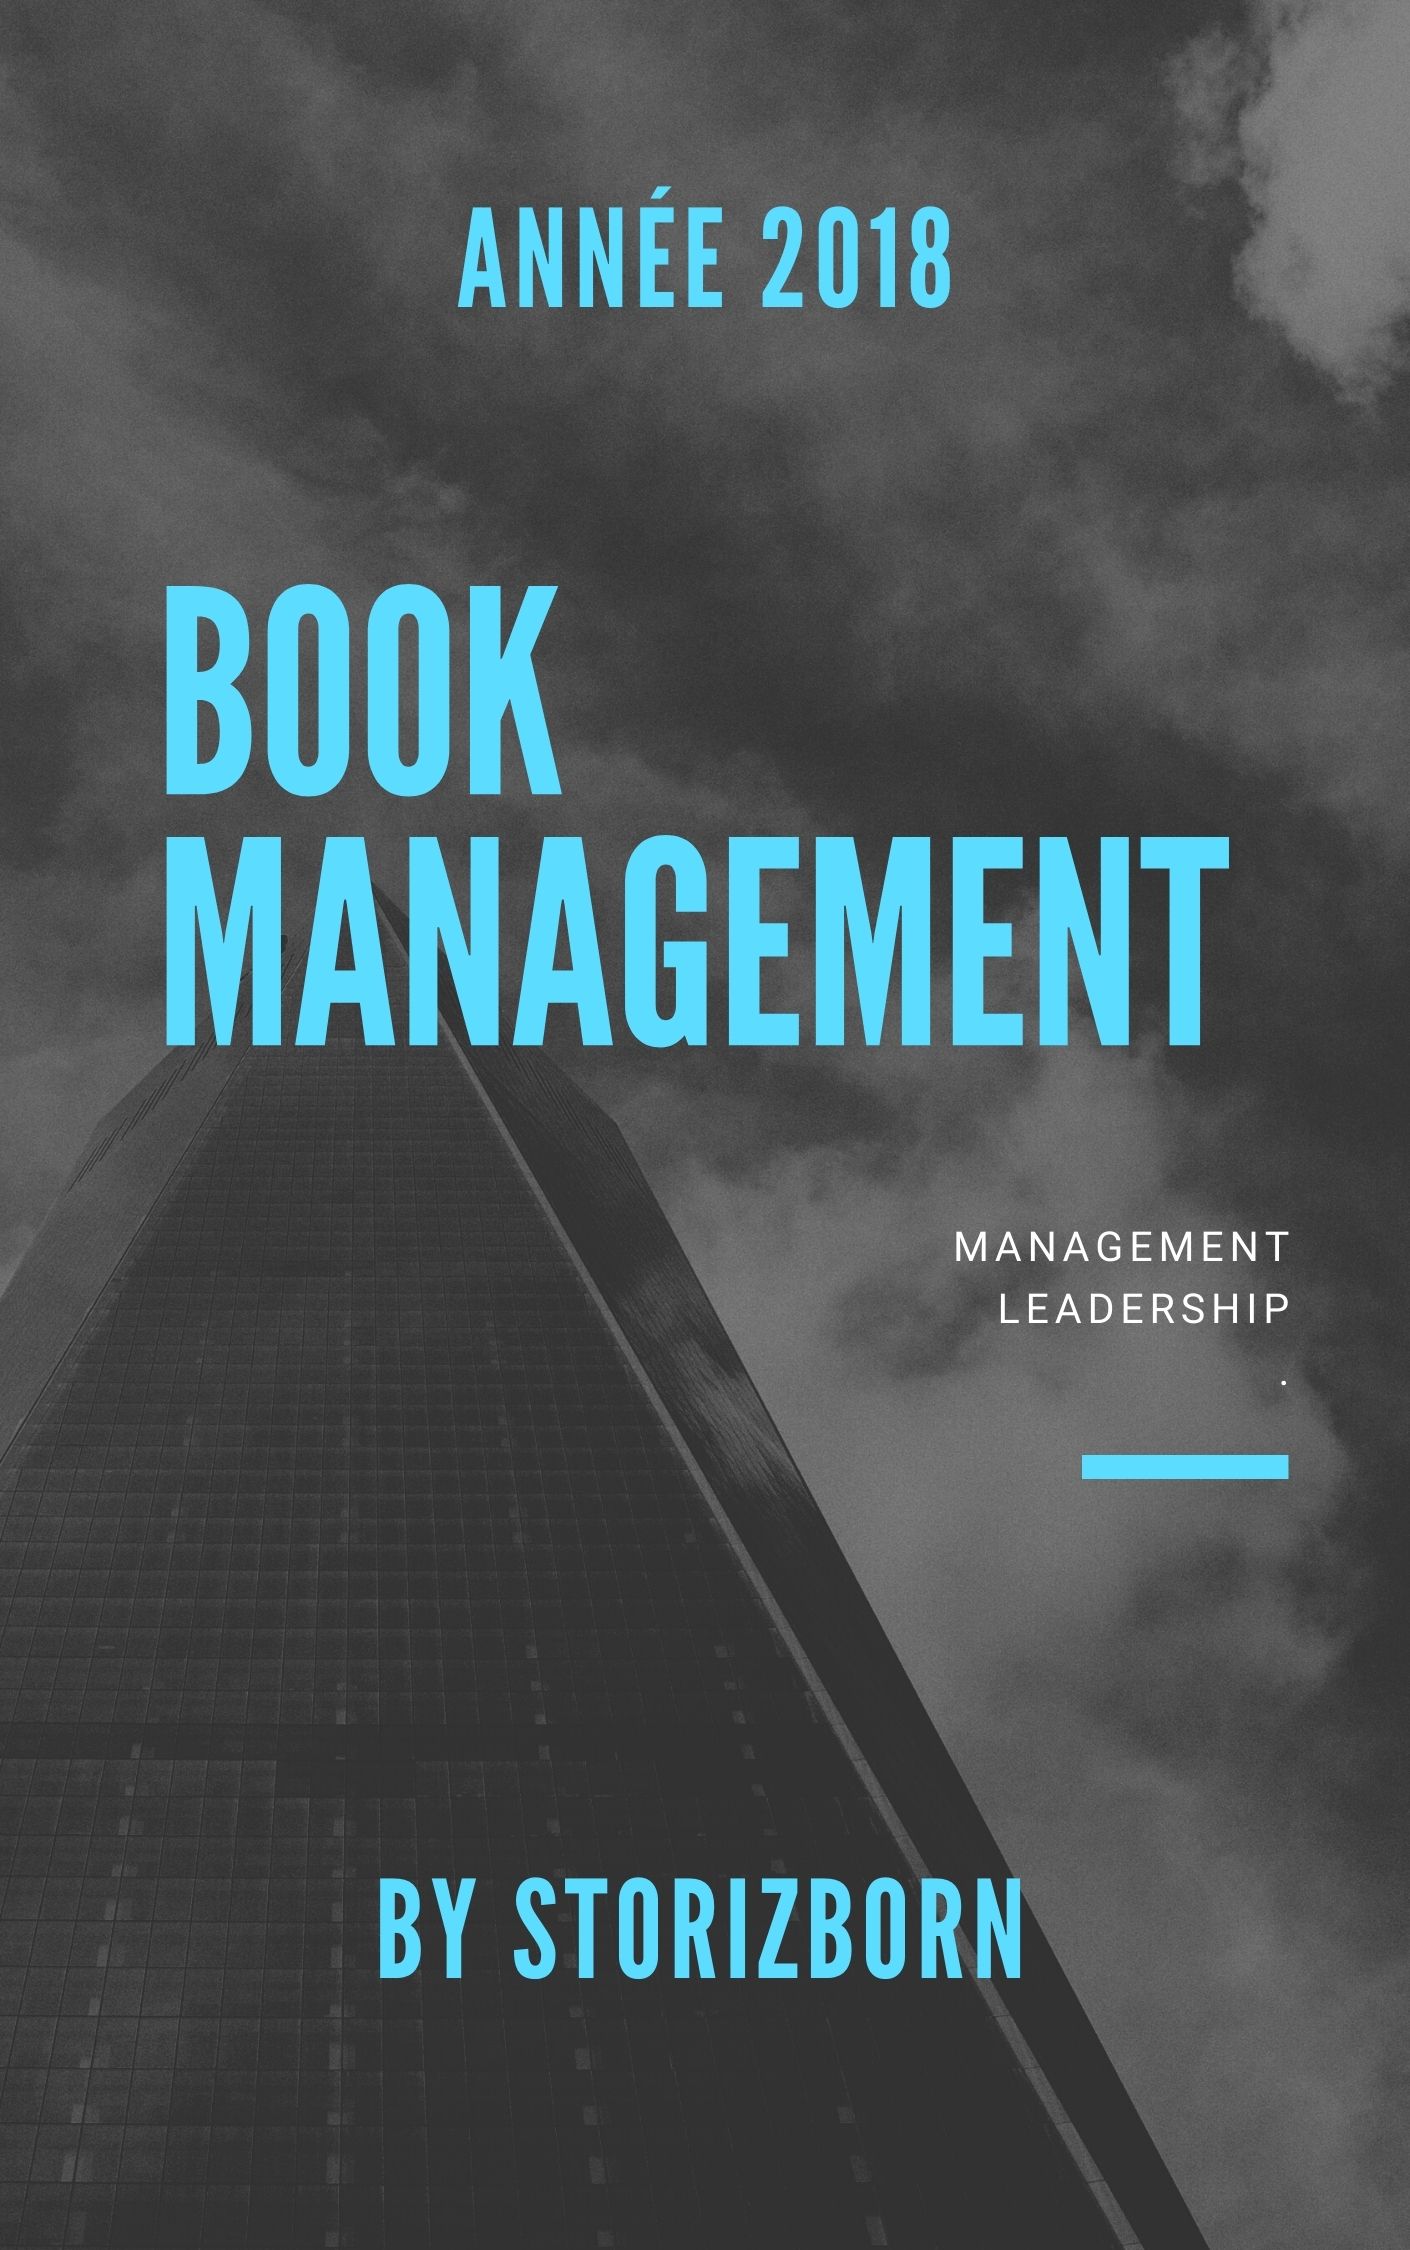 Book management 2018